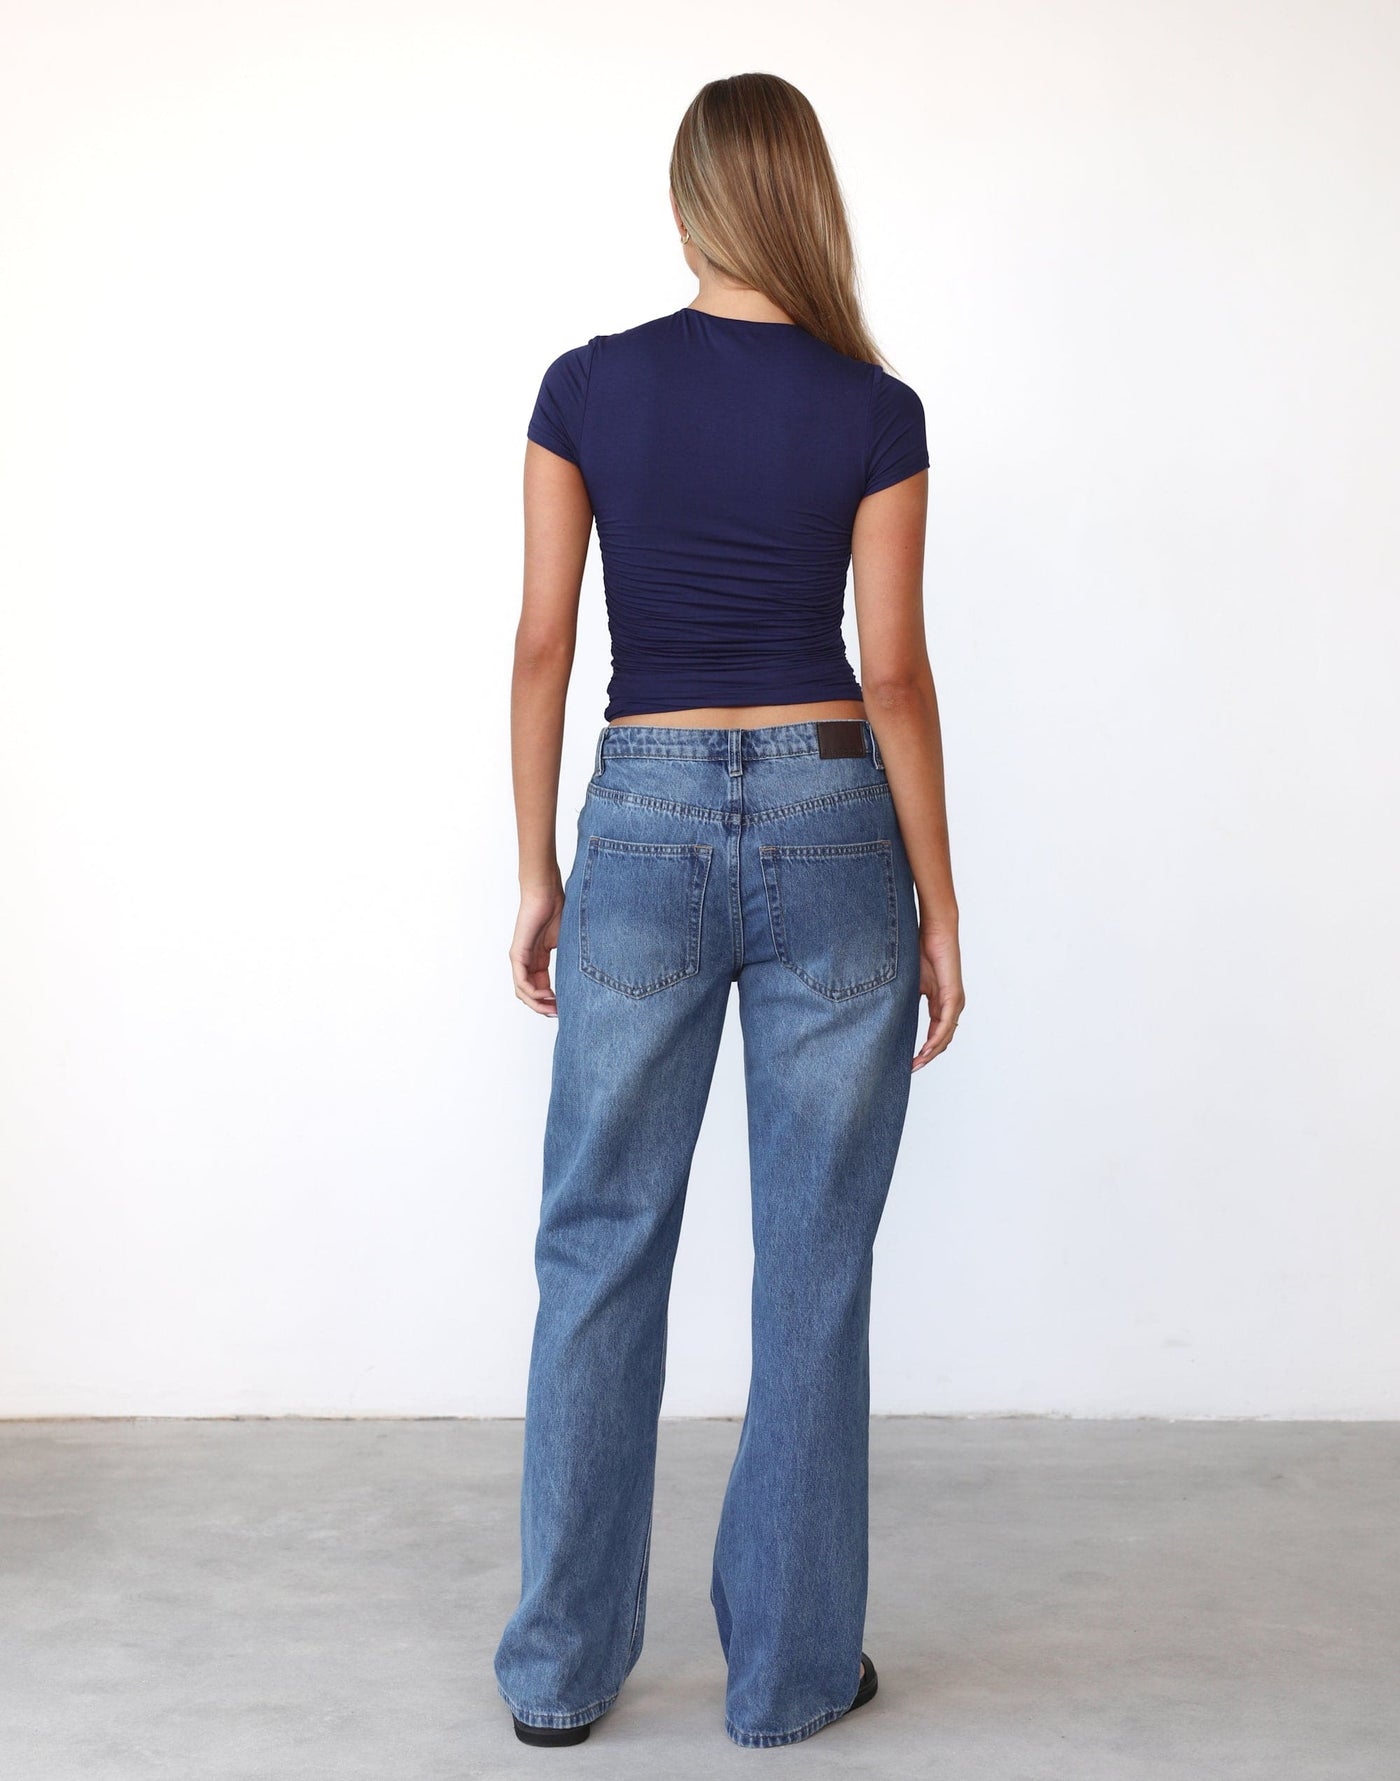 Easton Jeans (Mid Wash) - Mid Wash Denim Low Rise Jeans - Women's Pants - Charcoal Clothing